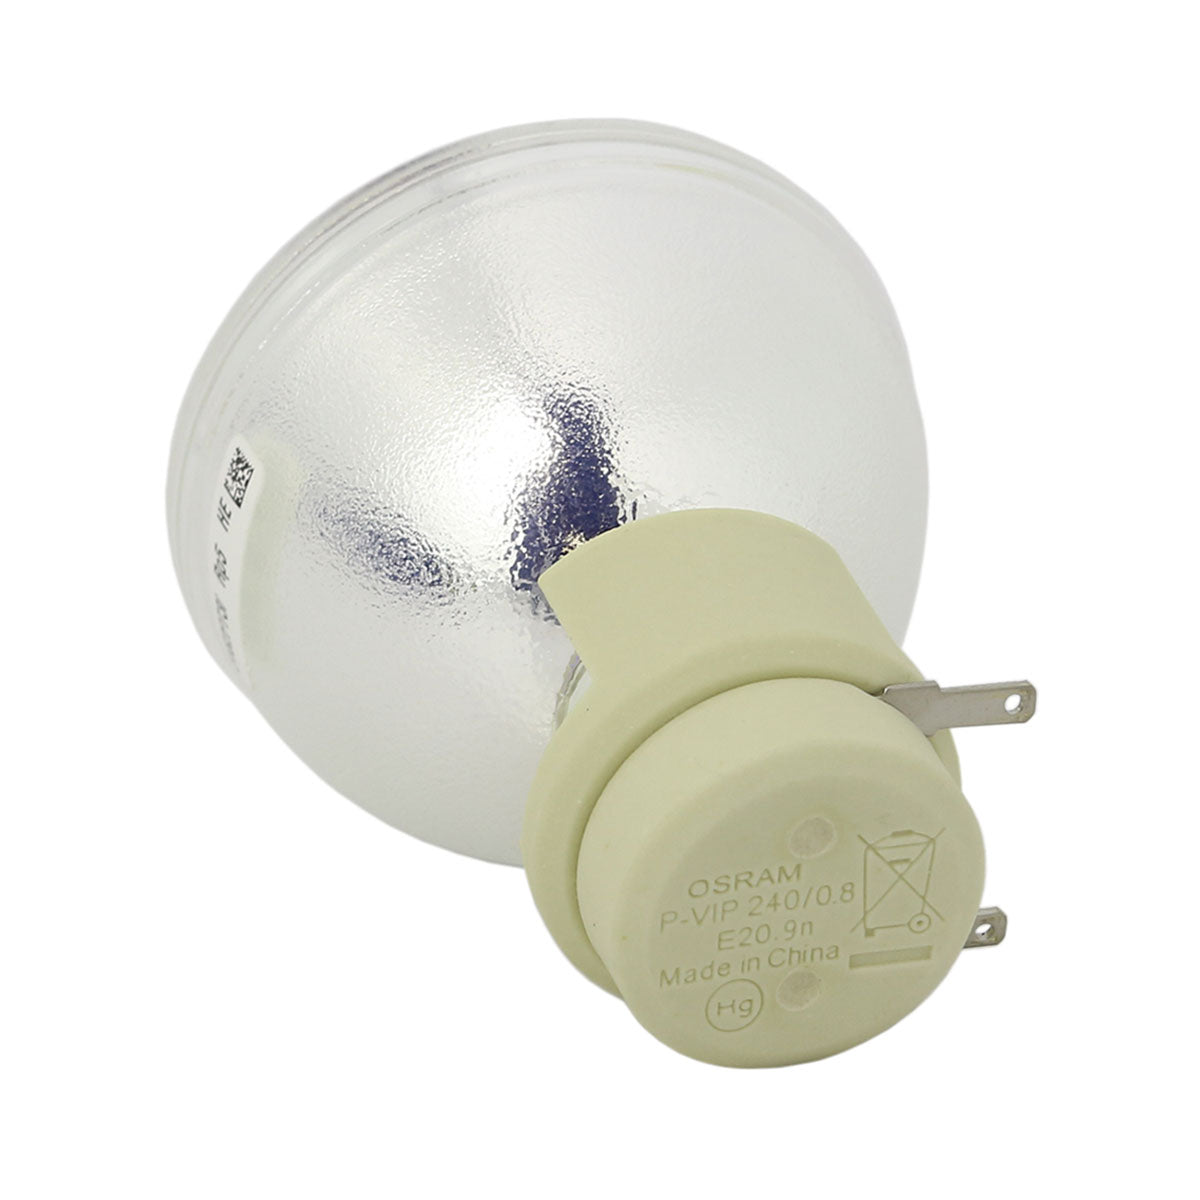 InFocus SP-Lamp-086 Osram Projector Bare Lamp